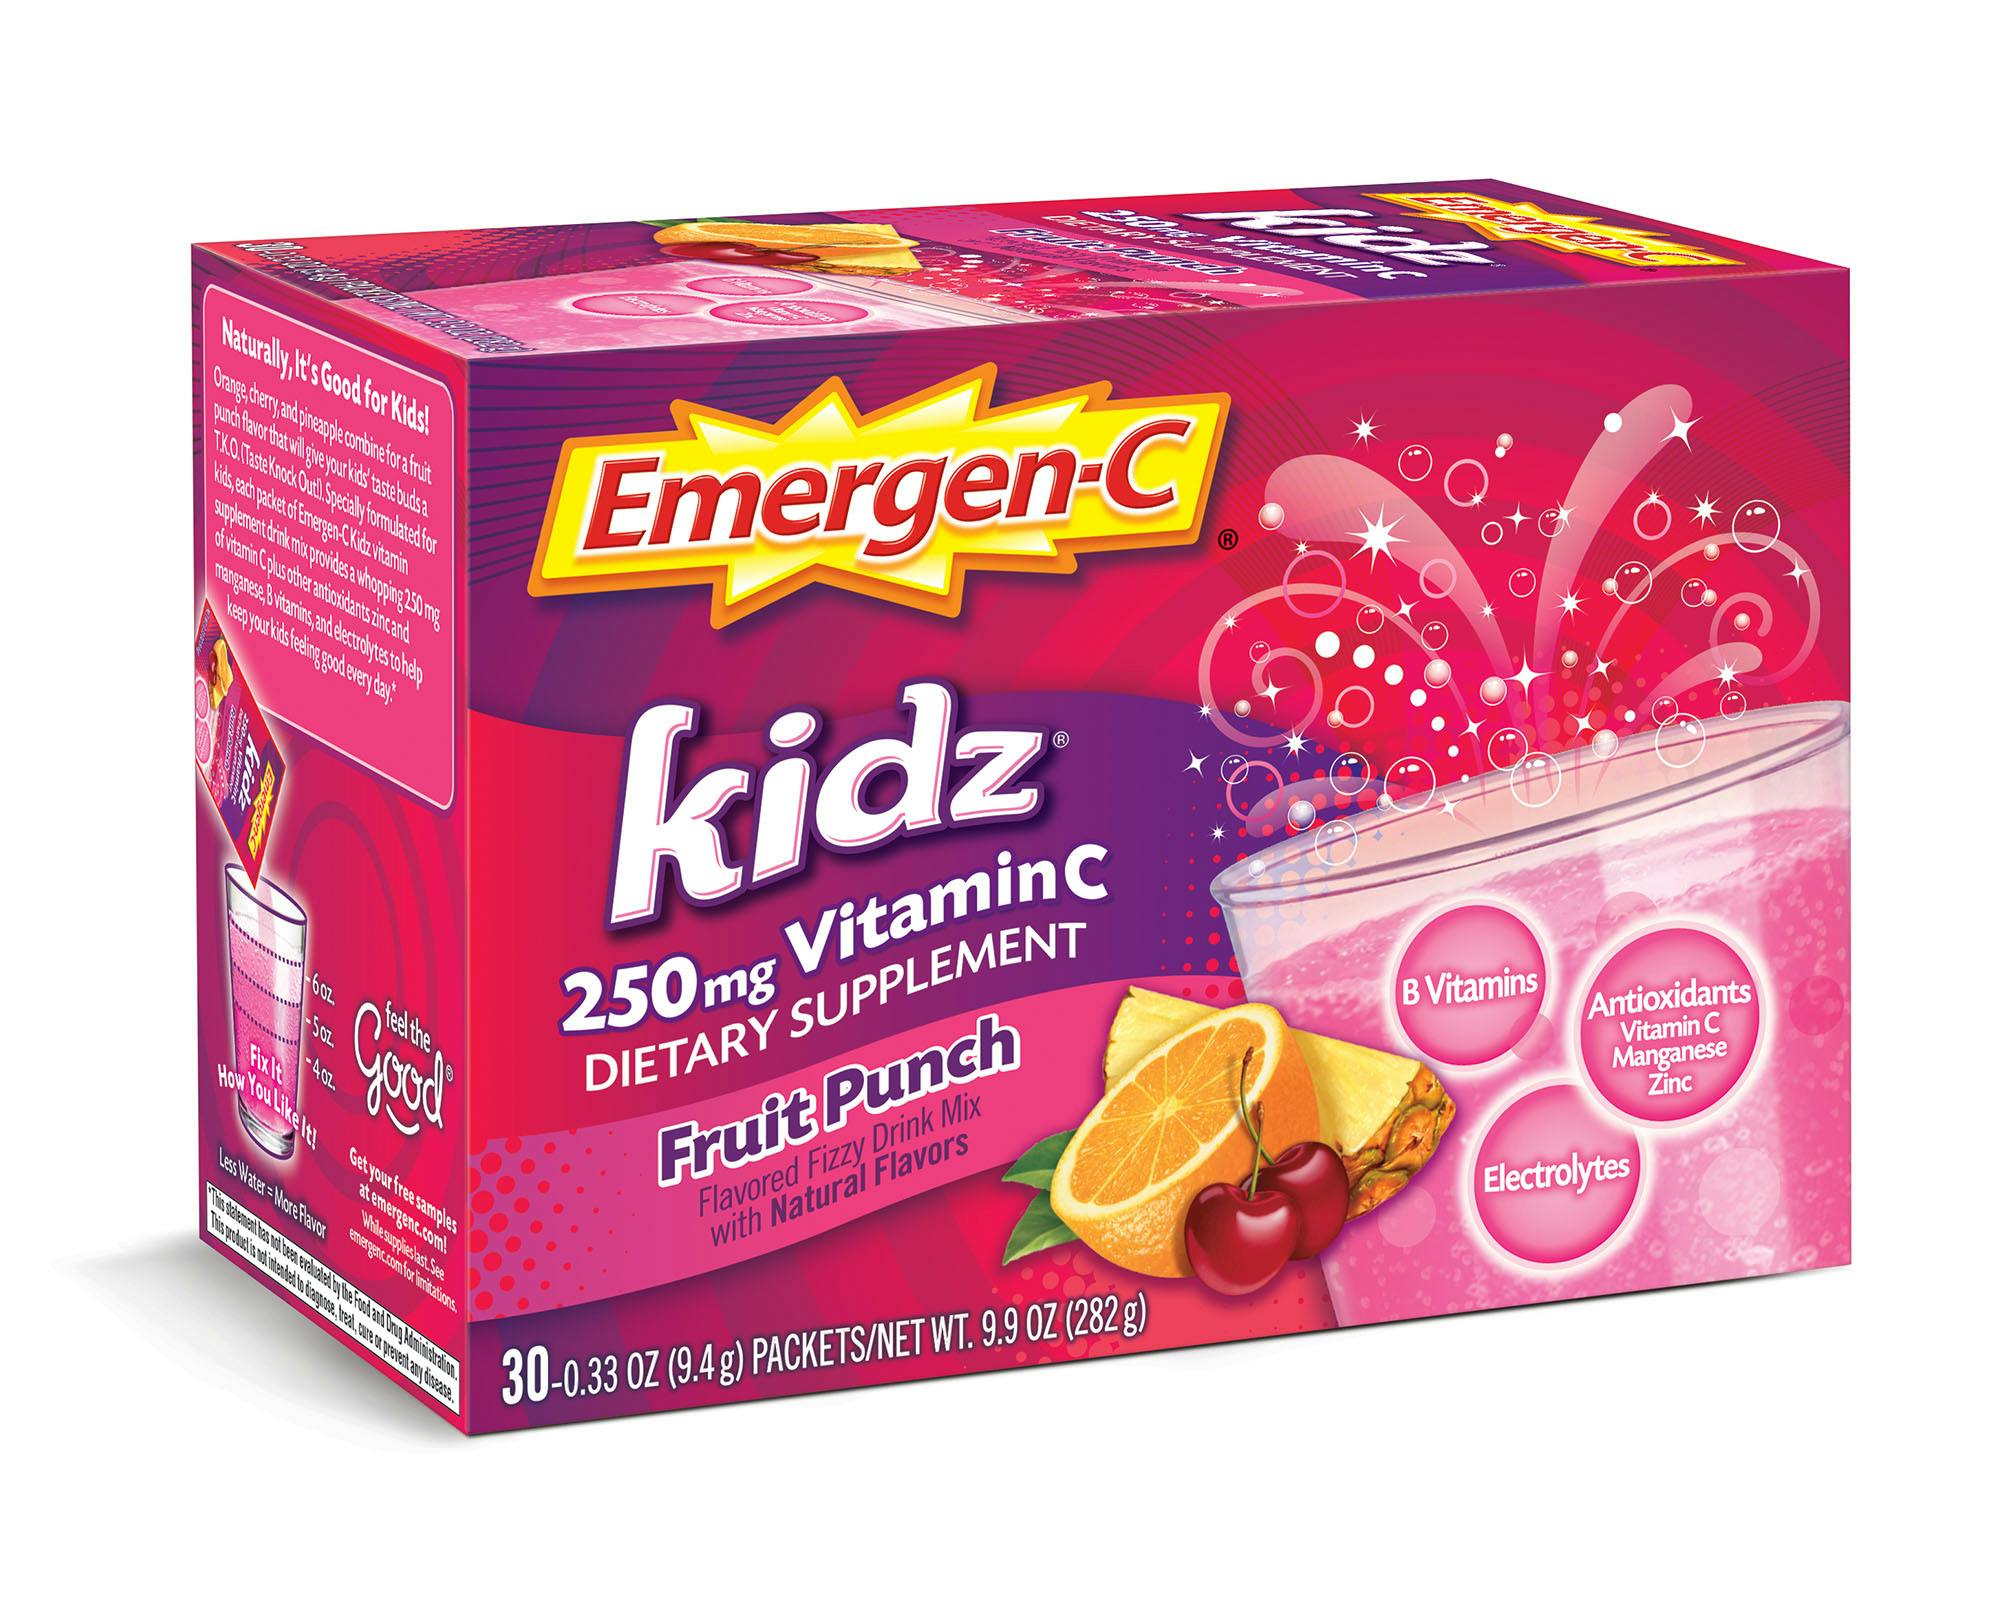 Kidz Fruit Punch Immune Support box angled view